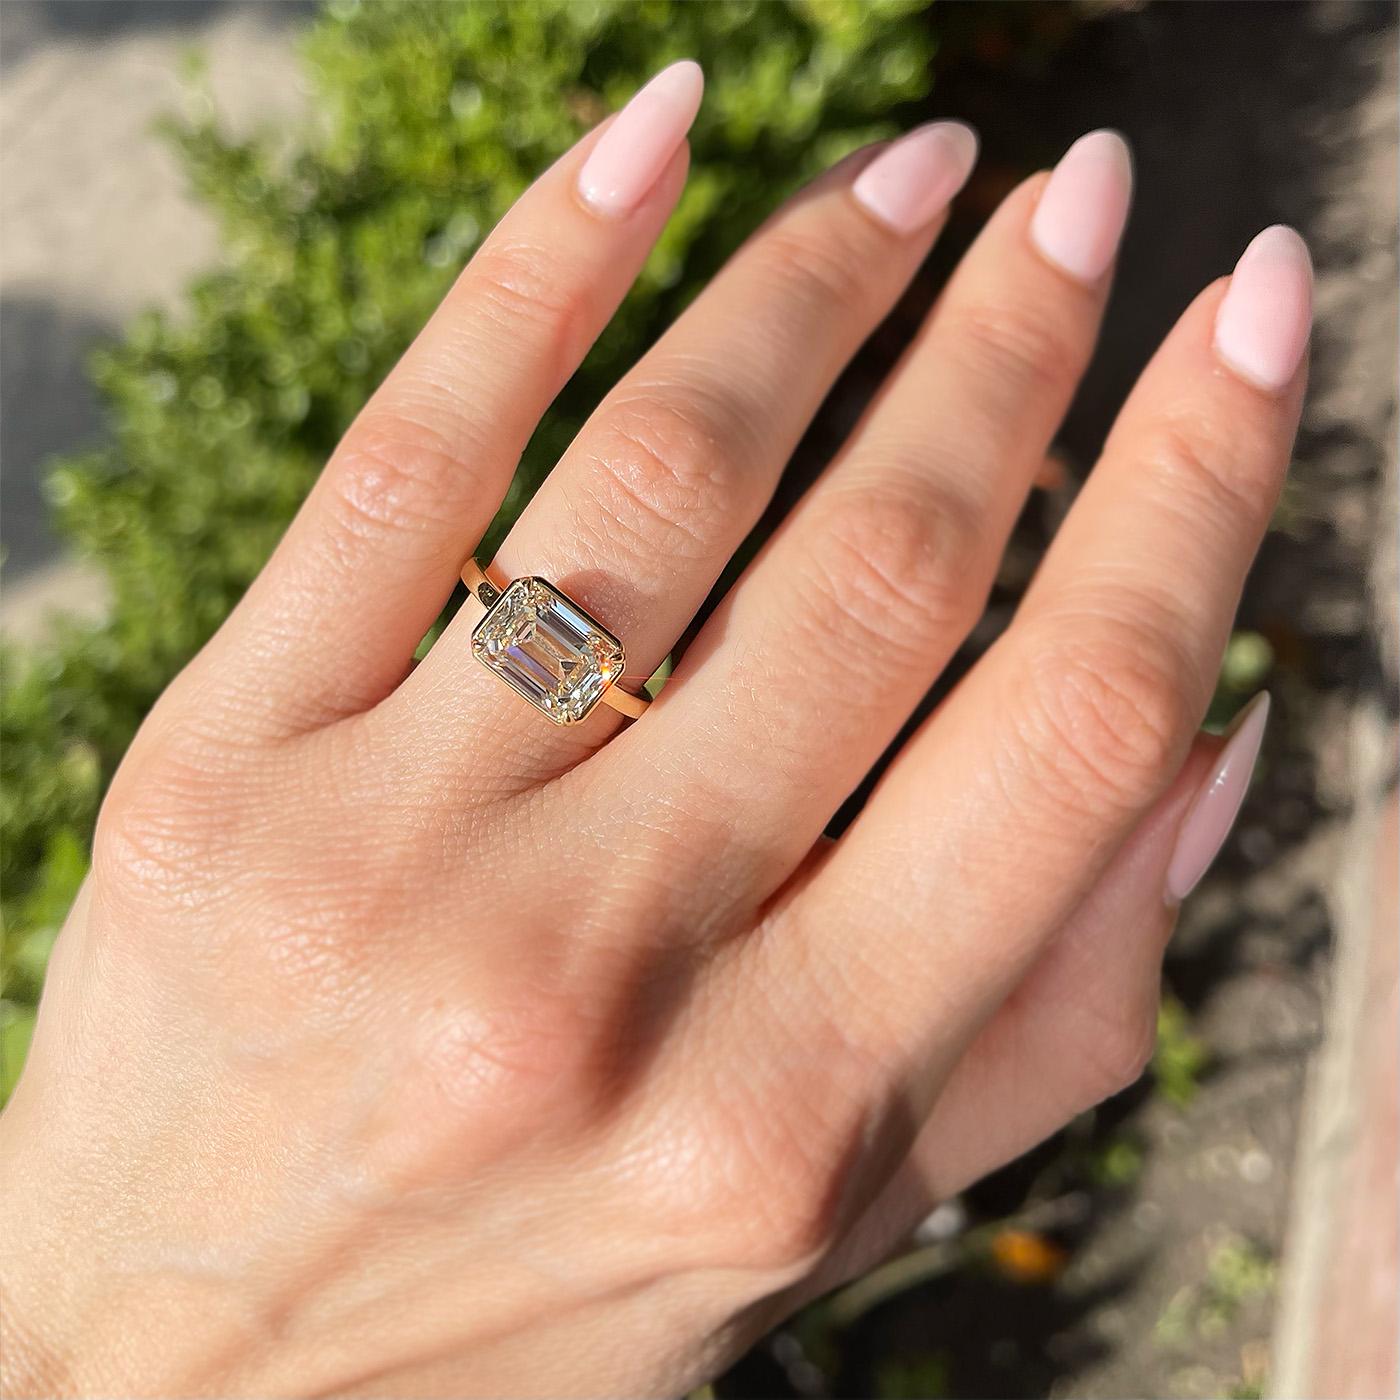 Women's Bespoke 4.04 Carat GIA Certified Emerald Cut Diamond Engagement Ring